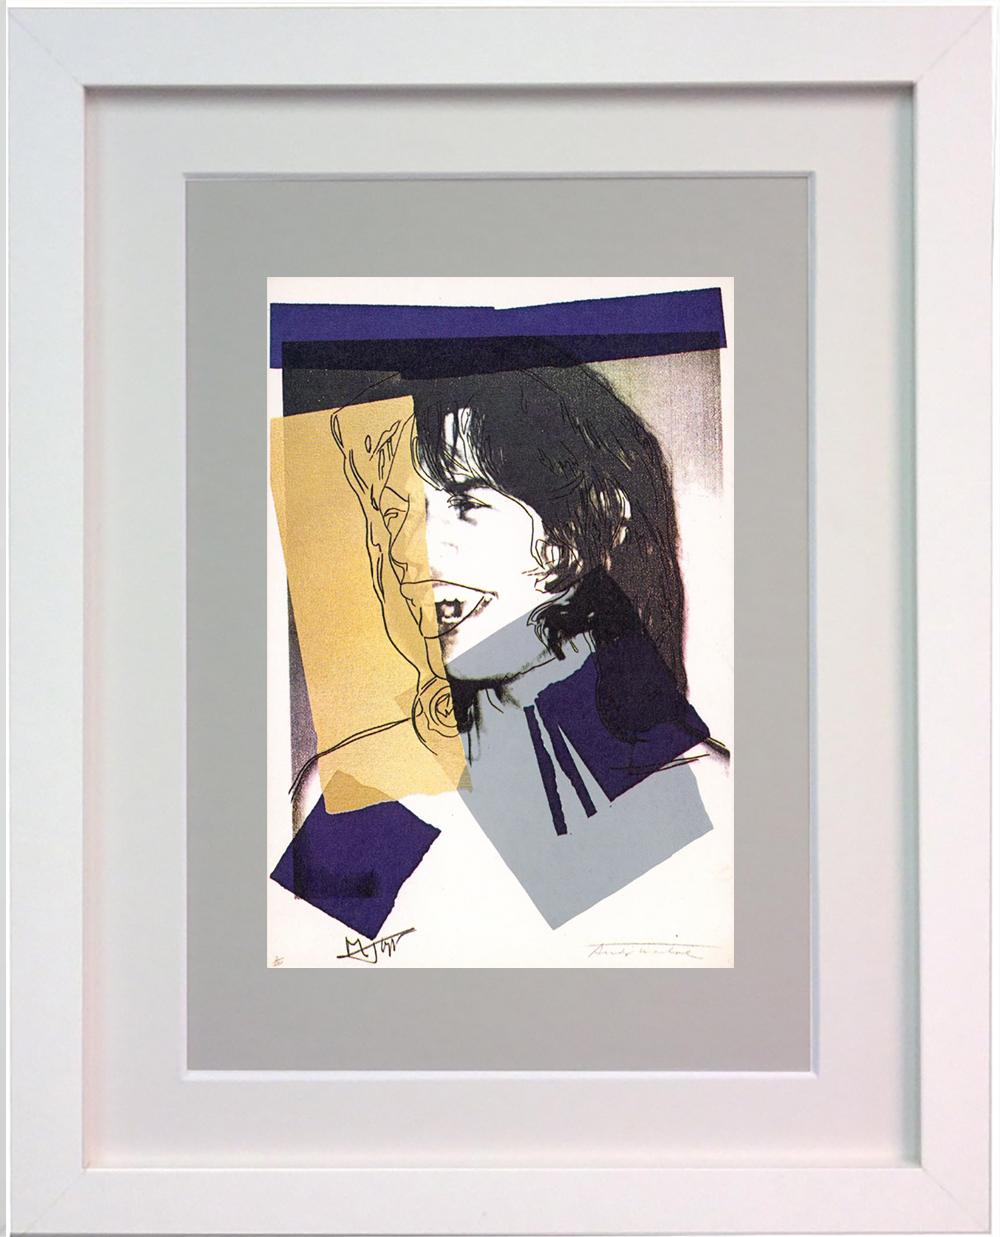 Andy Warhol, Mick Jagger, carte d'annonce encadrée, 1975 - Art de (after) Andy Warhol